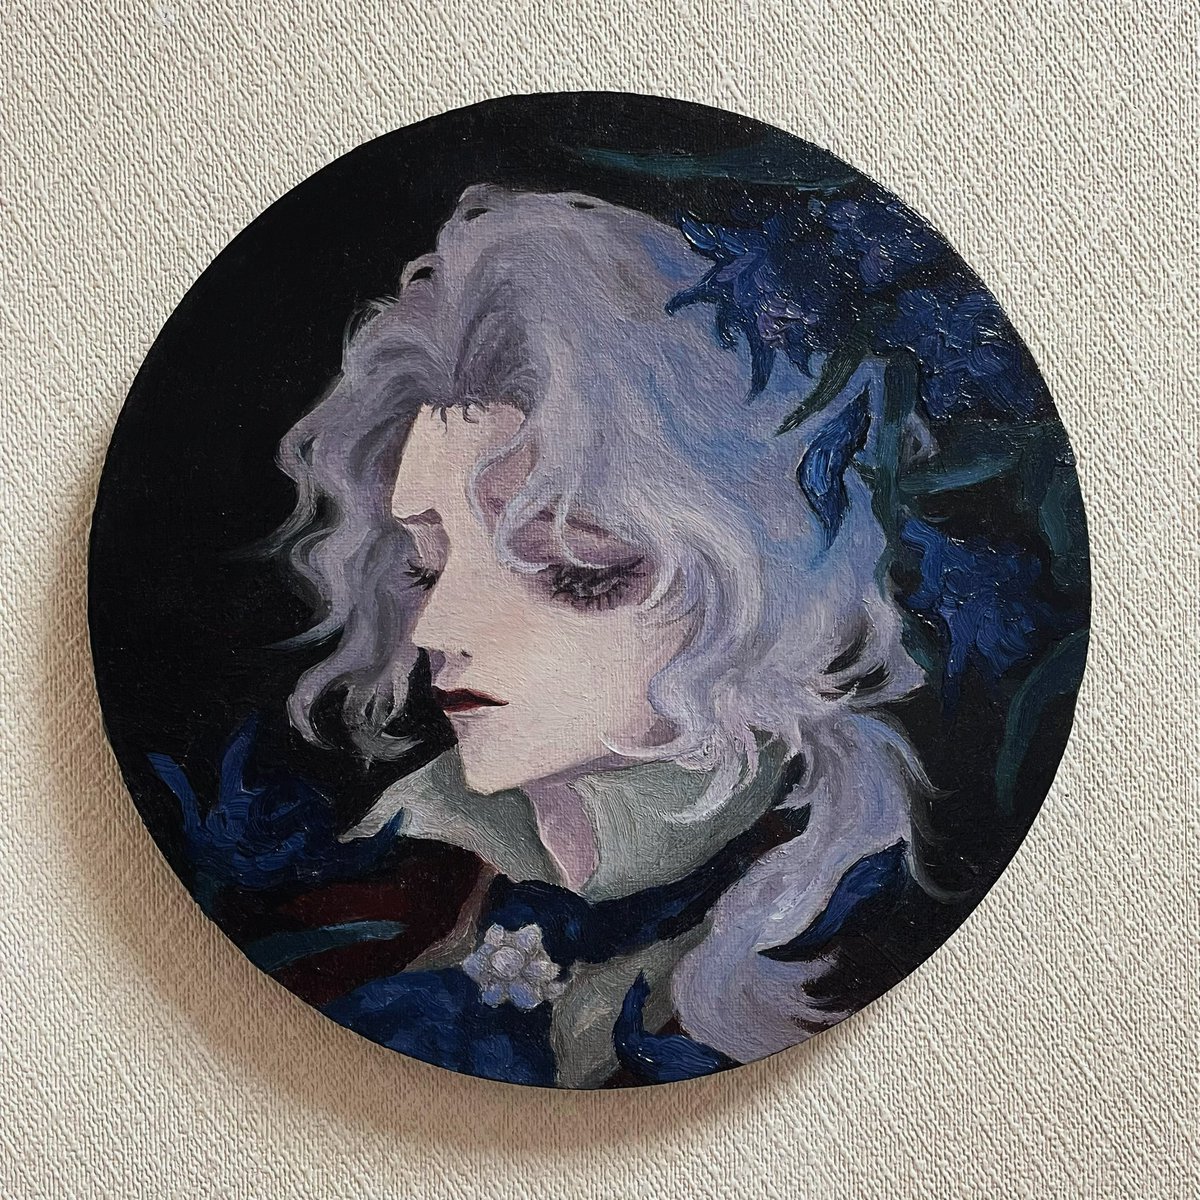 ✒️🎹

Oil on circular canvas, 20cm diameter